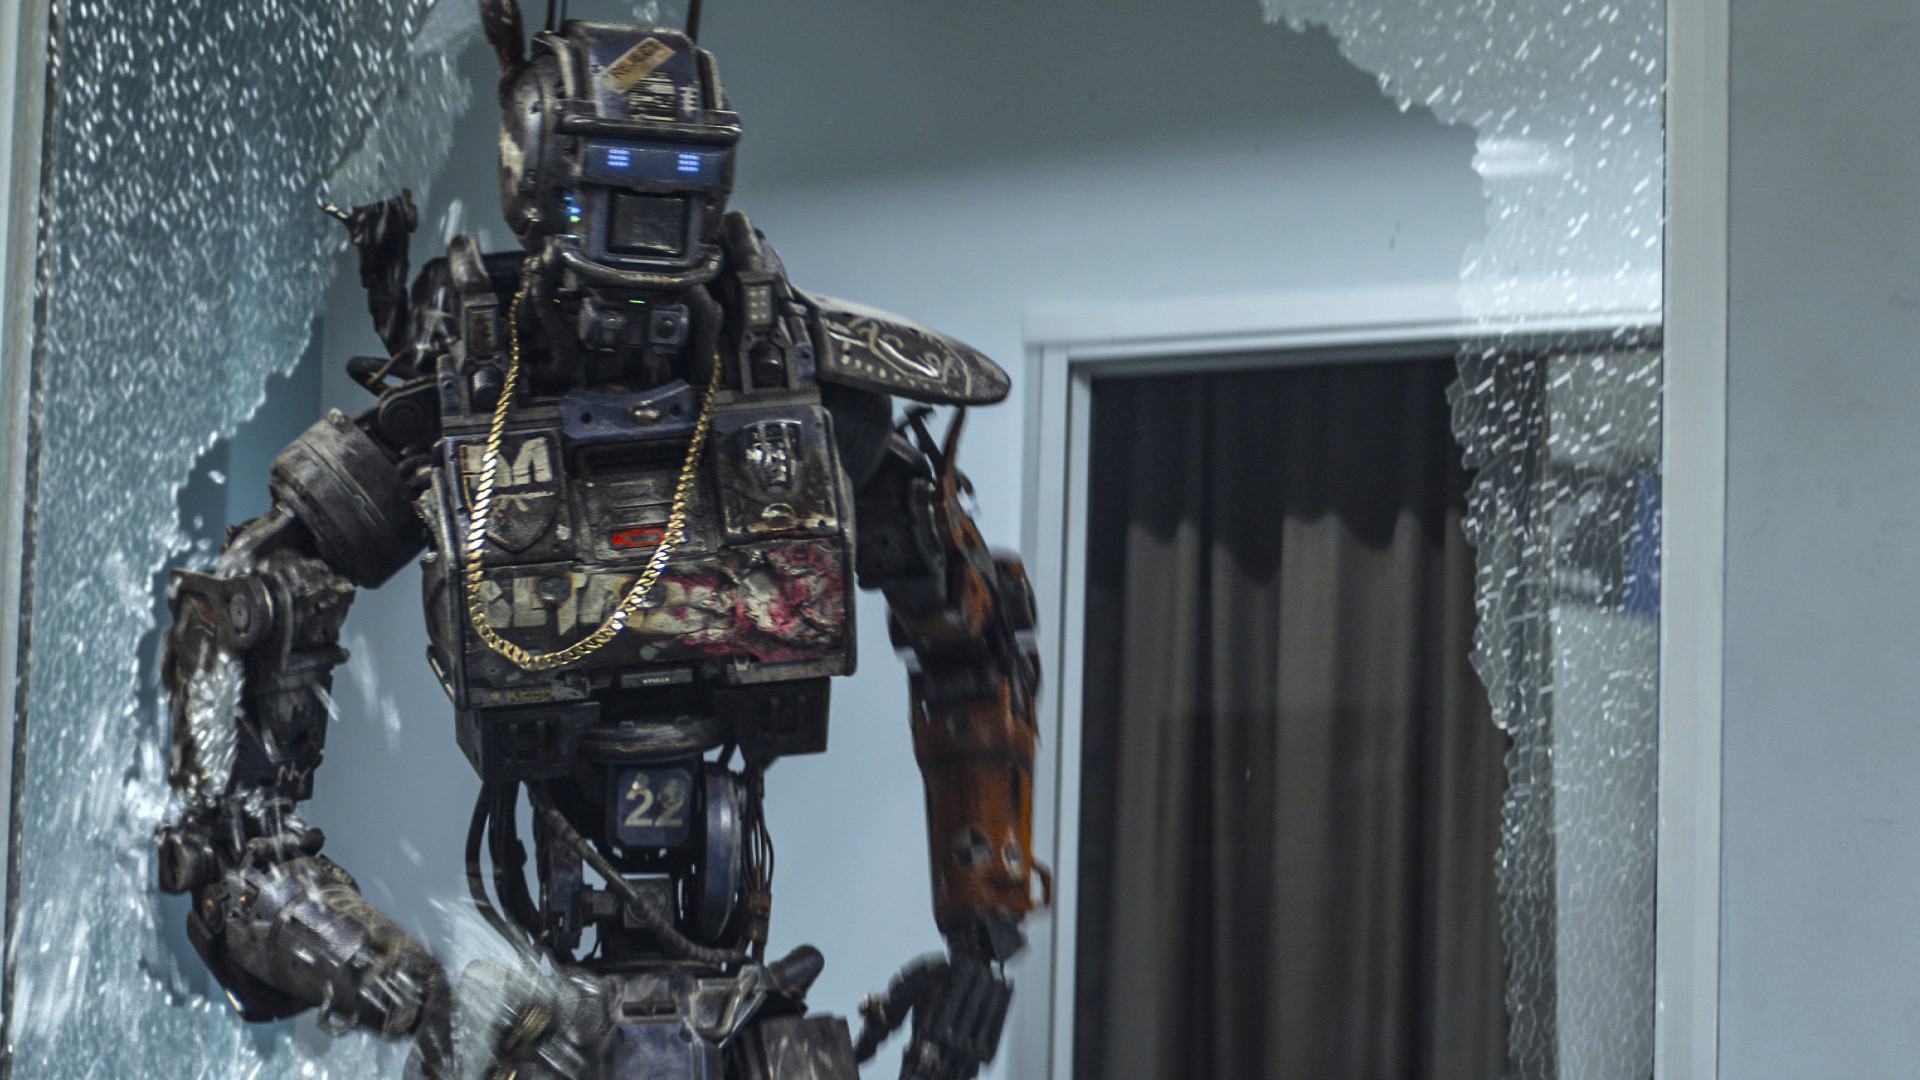 Робот по имени Чаппи, кино, фильм, робот, Chappie, Best Movies of 2015, wallpaper, robot, police, gun (horizontal)